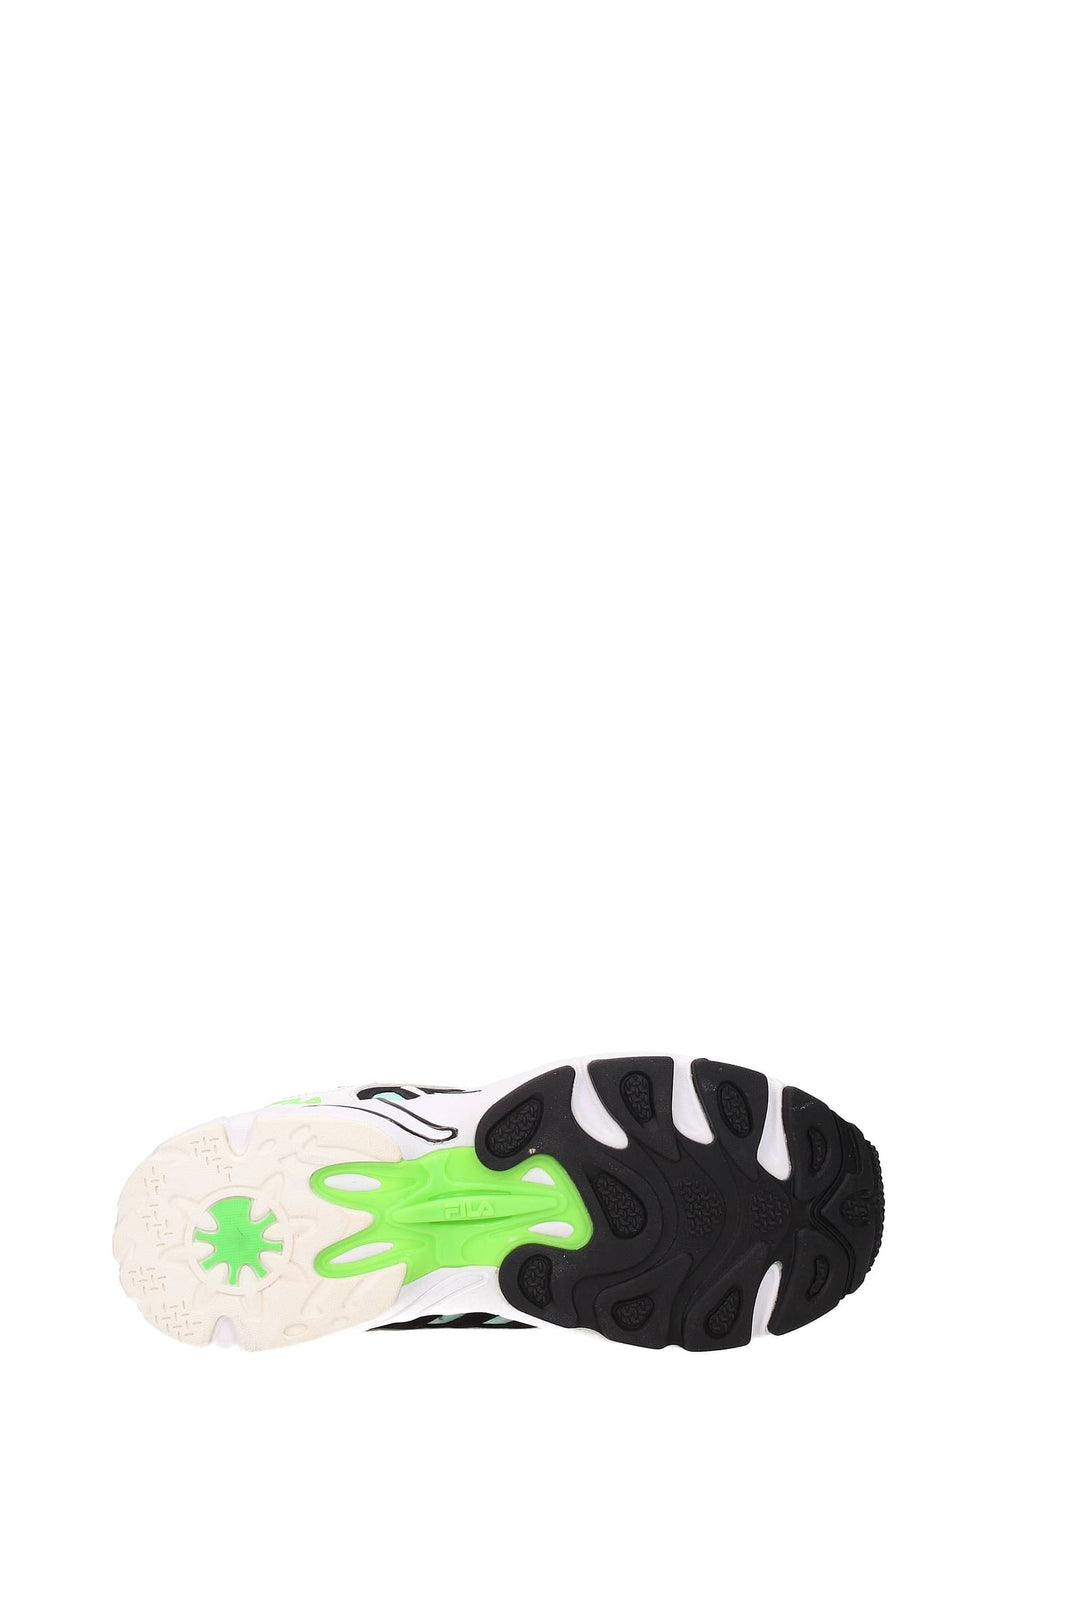 Sneakers X Fila Tessuto Bianco Verde Acqua - MSGM - Donna